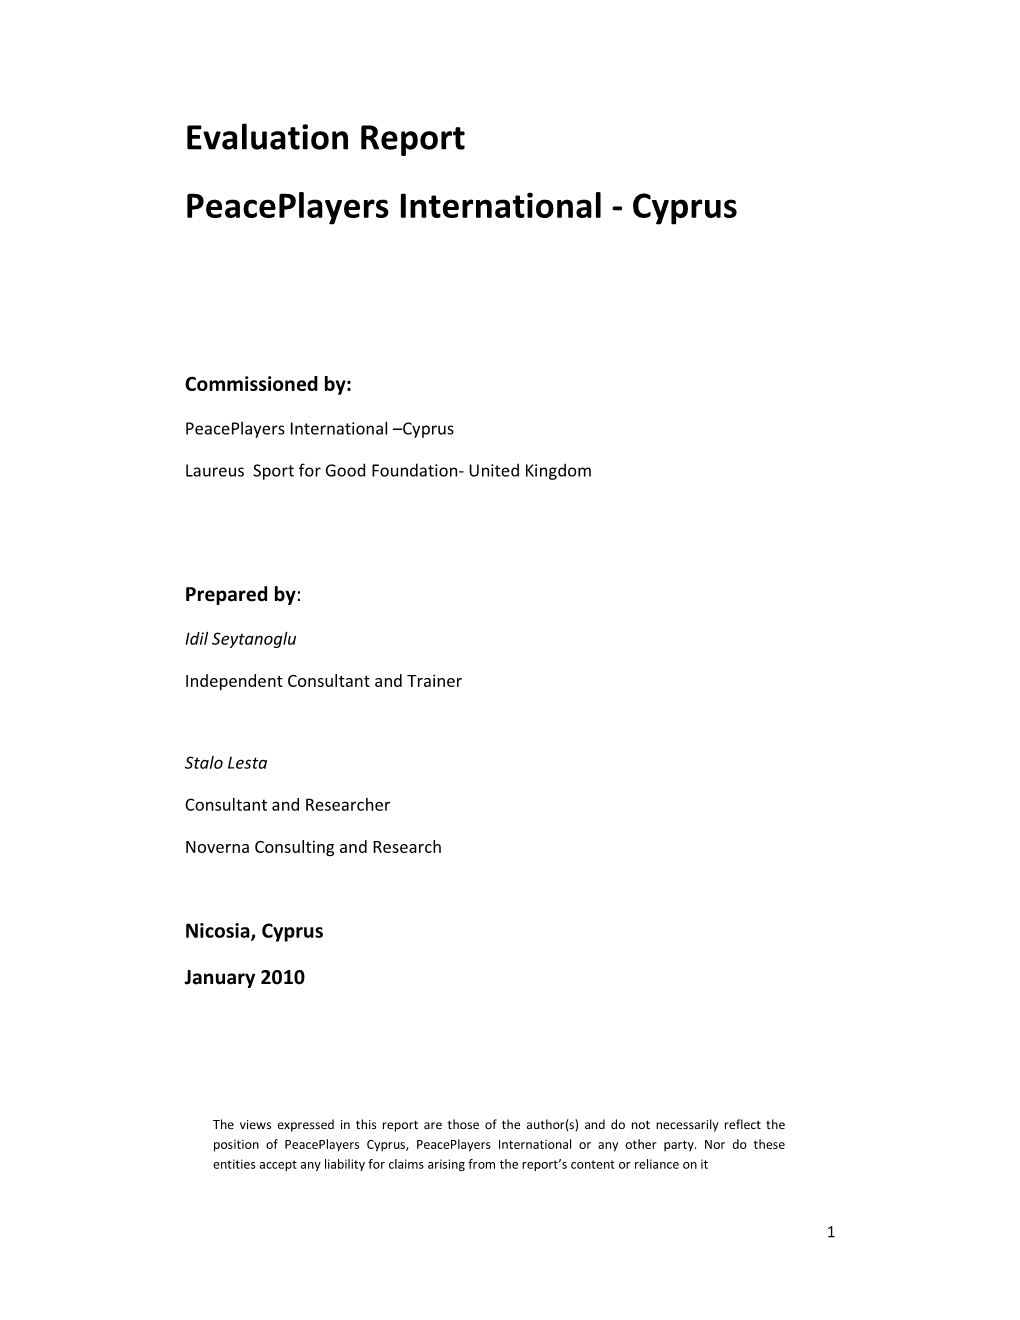 Evaluation Report Peaceplayers International - Cyprus